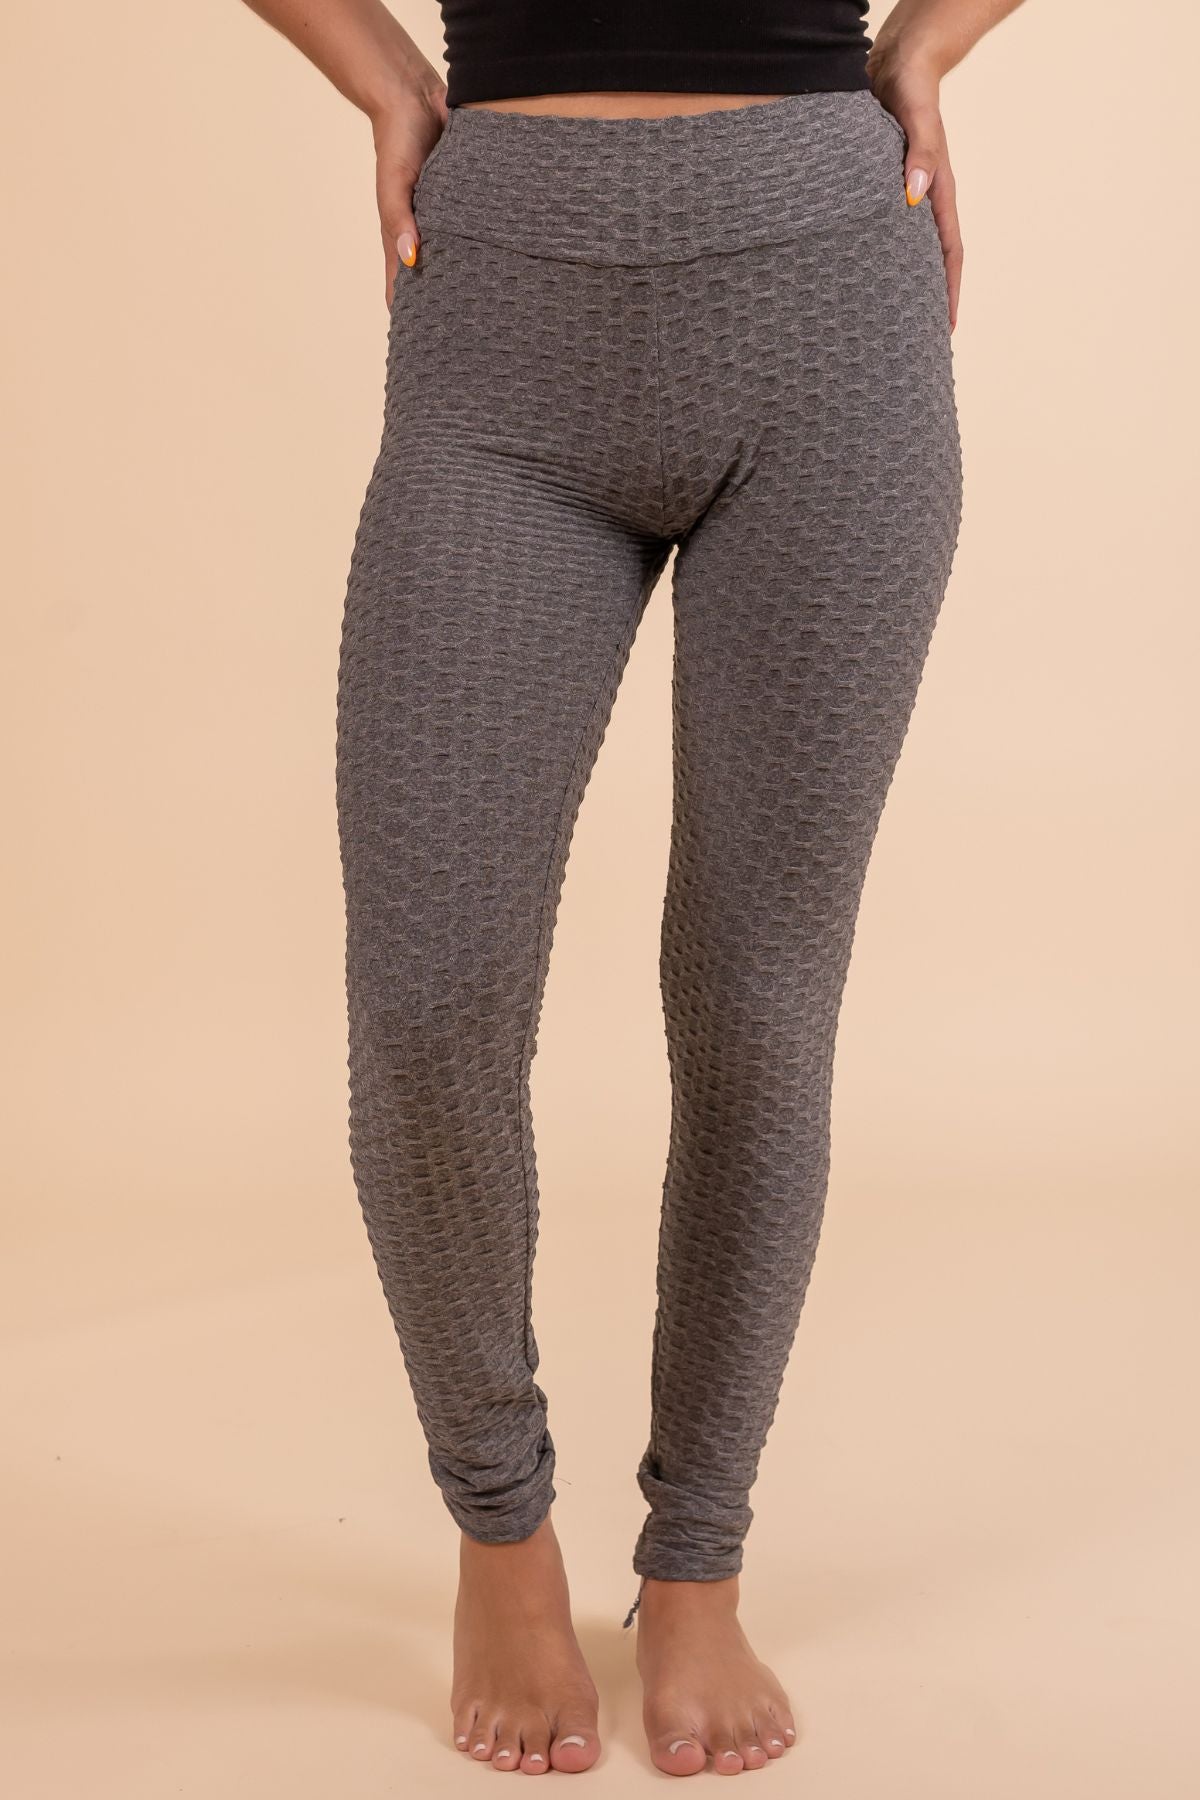 Grey High Waisted Capri Leggings For Women, Skin Fit at Rs 430 in